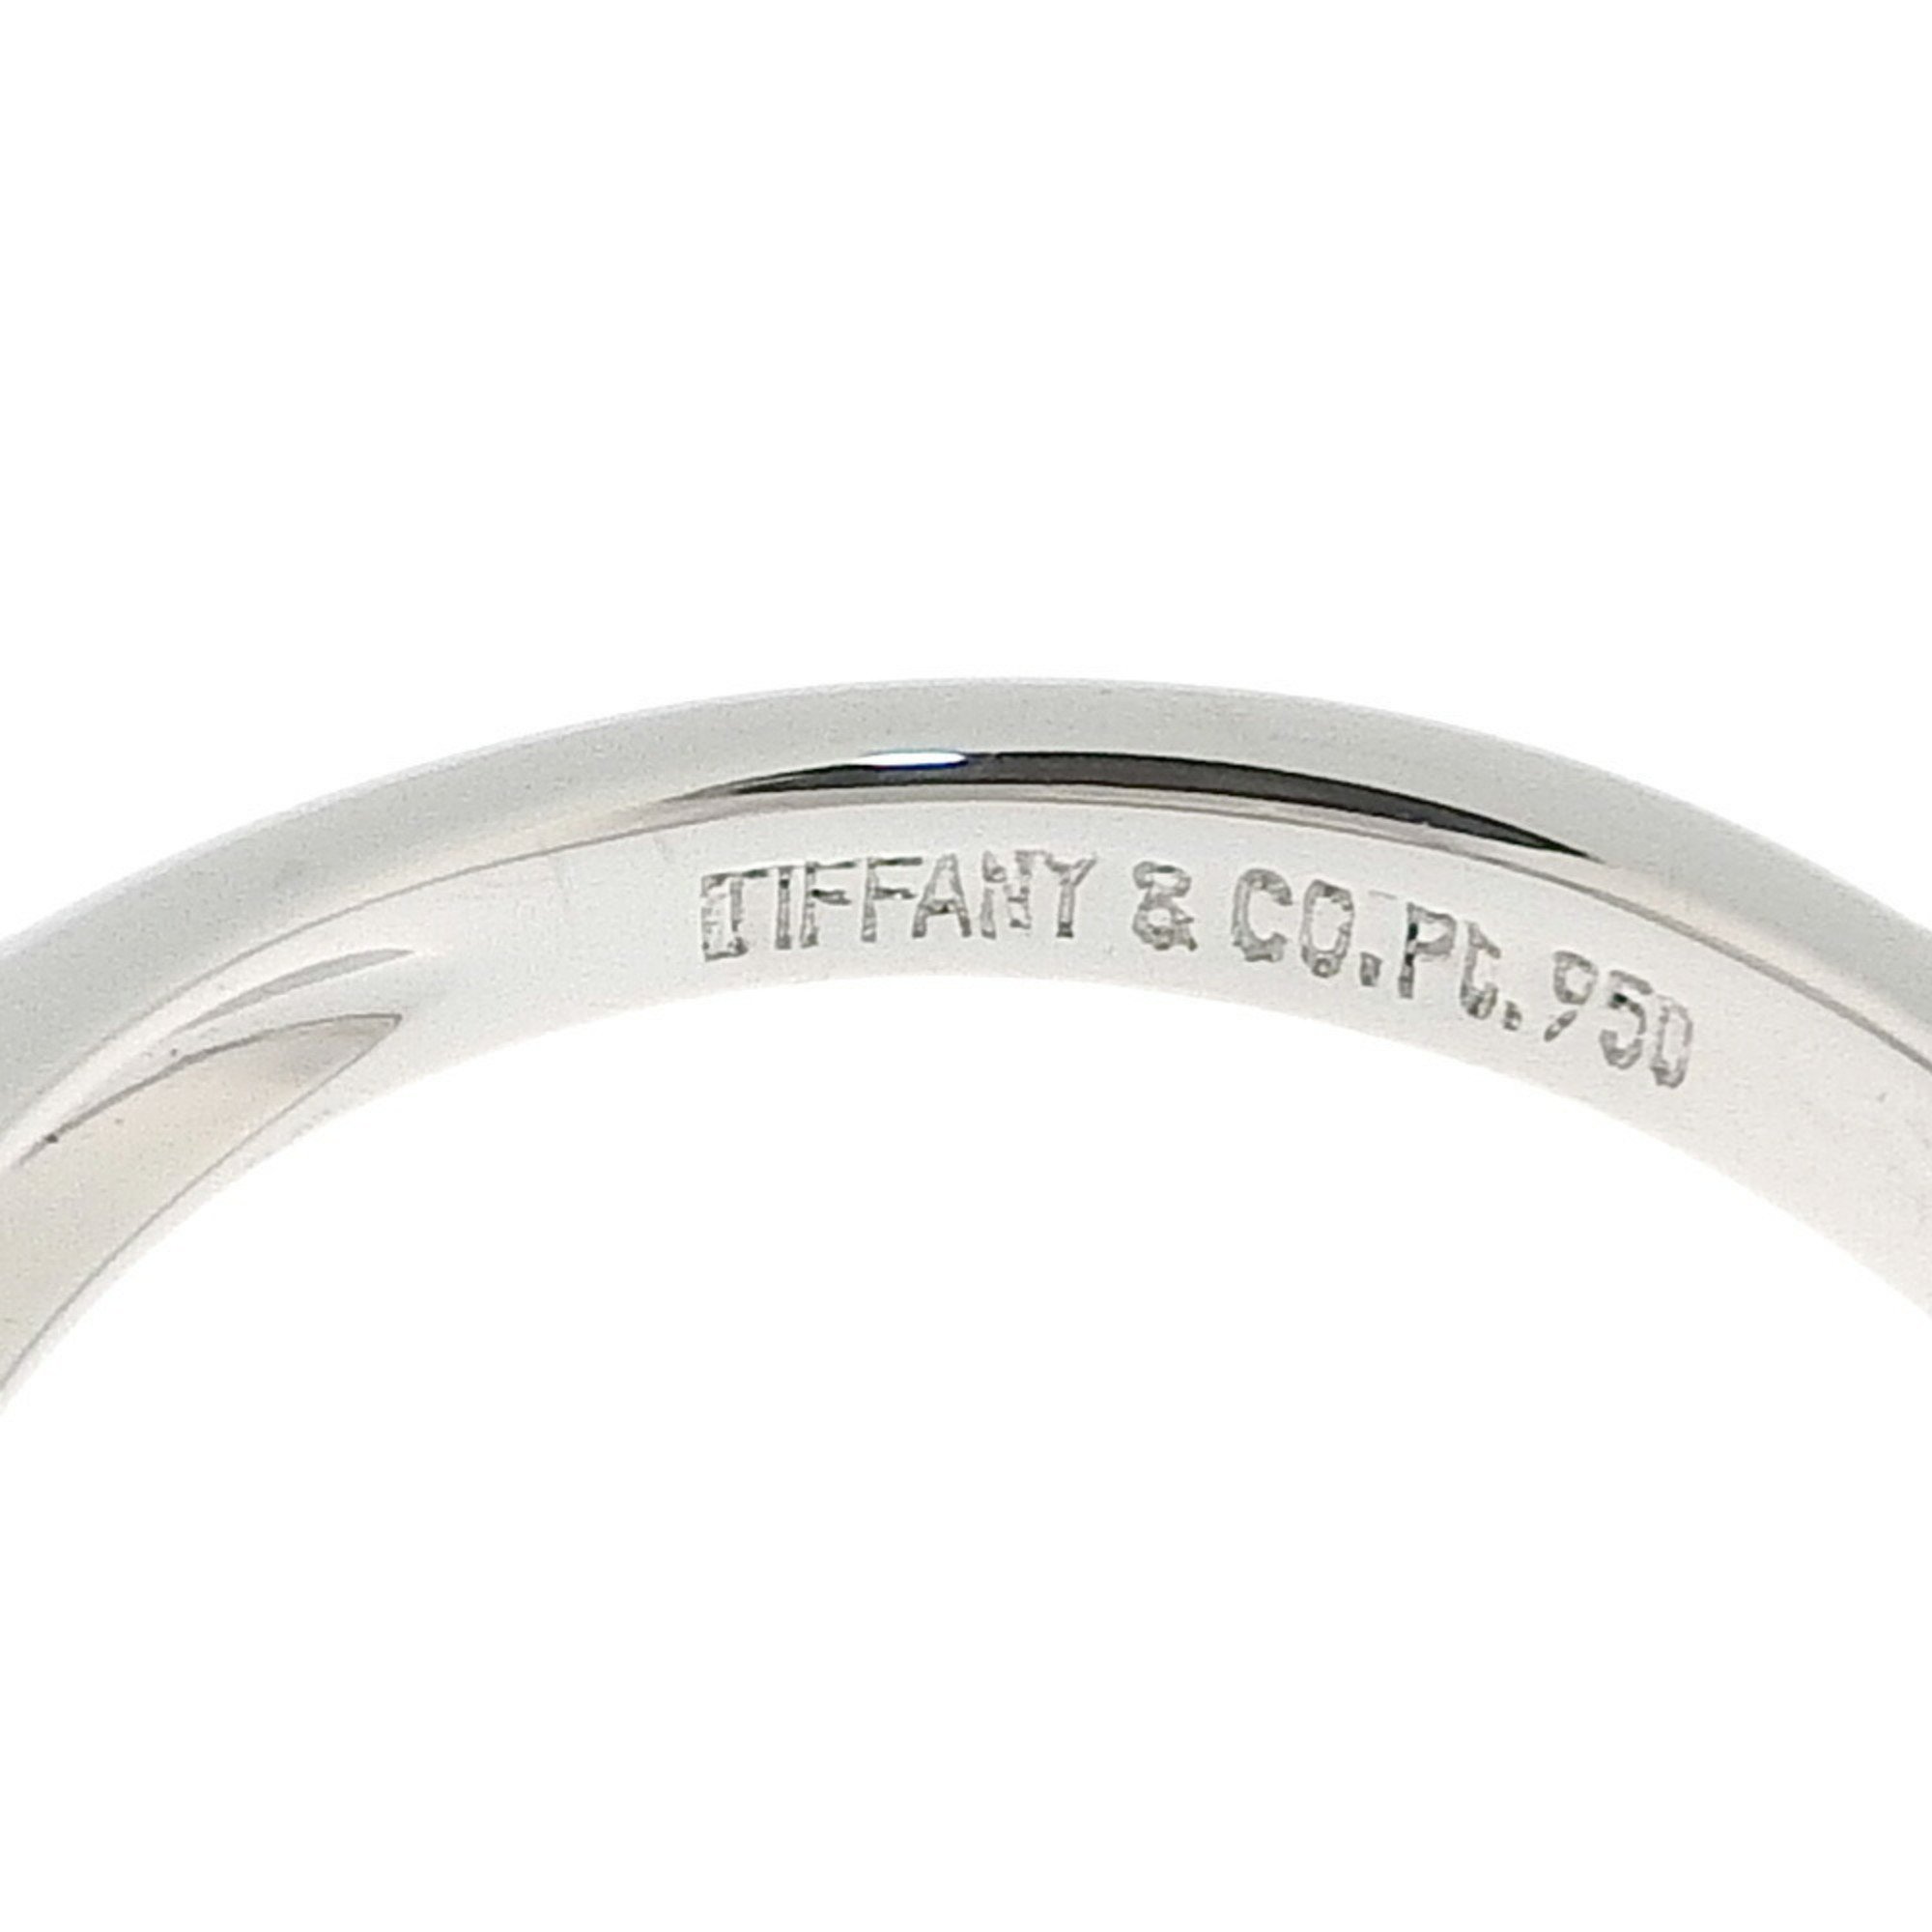 Tiffany & Co. Double Teardrop, size 10, ring, Pt950 platinum x diamond, approx. 5.0g, women's S